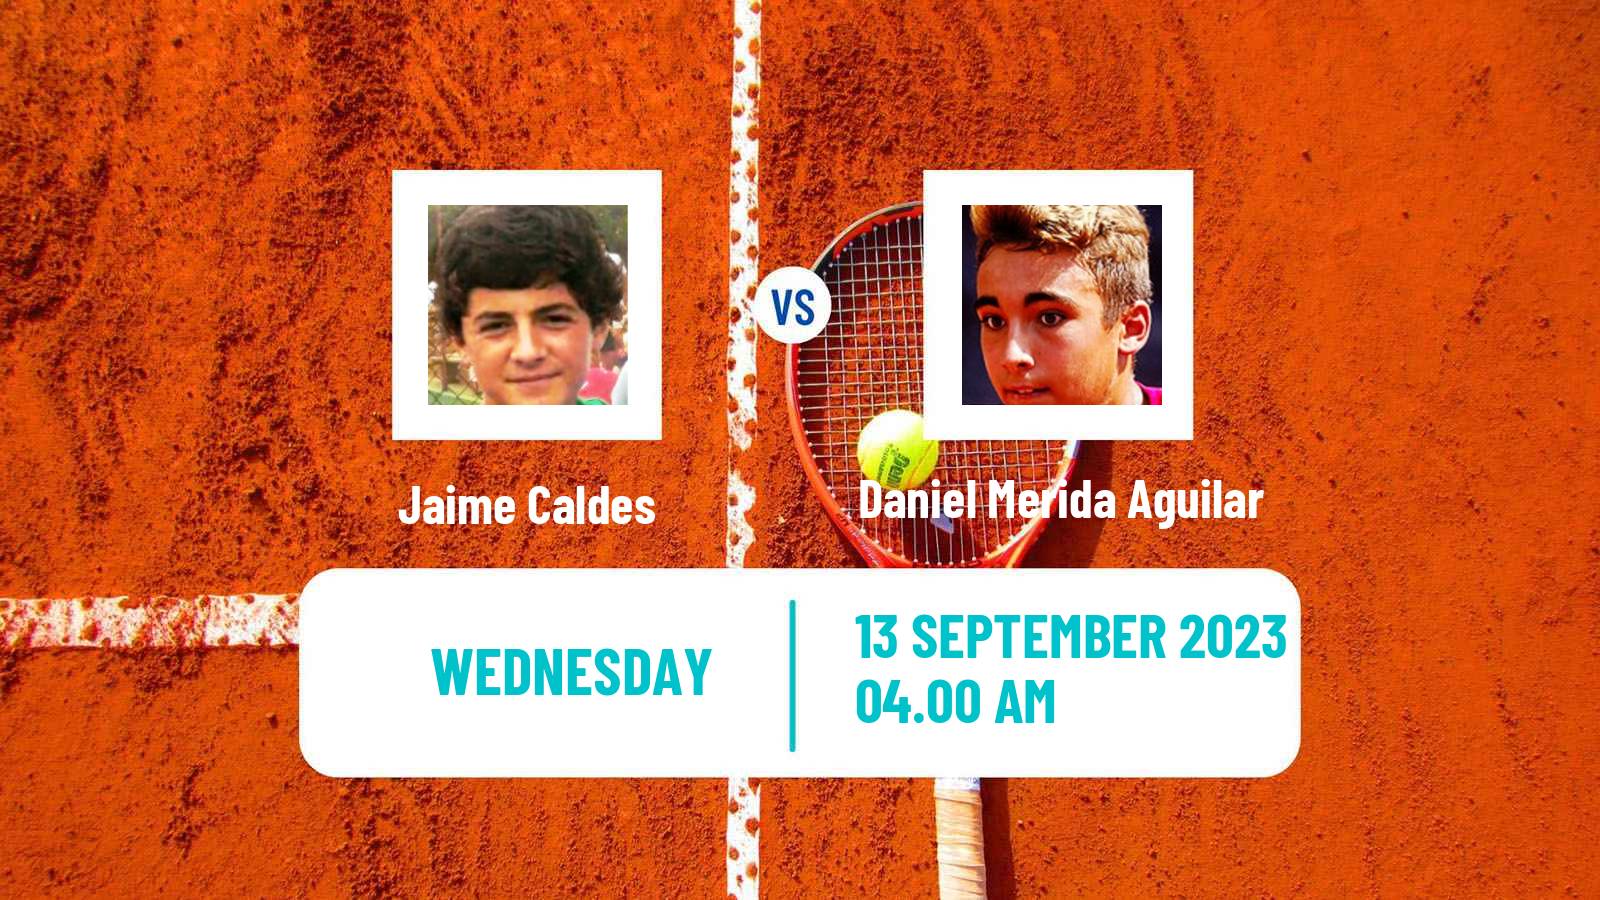 Tennis ITF M25 Madrid Men Jaime Caldes - Daniel Merida Aguilar